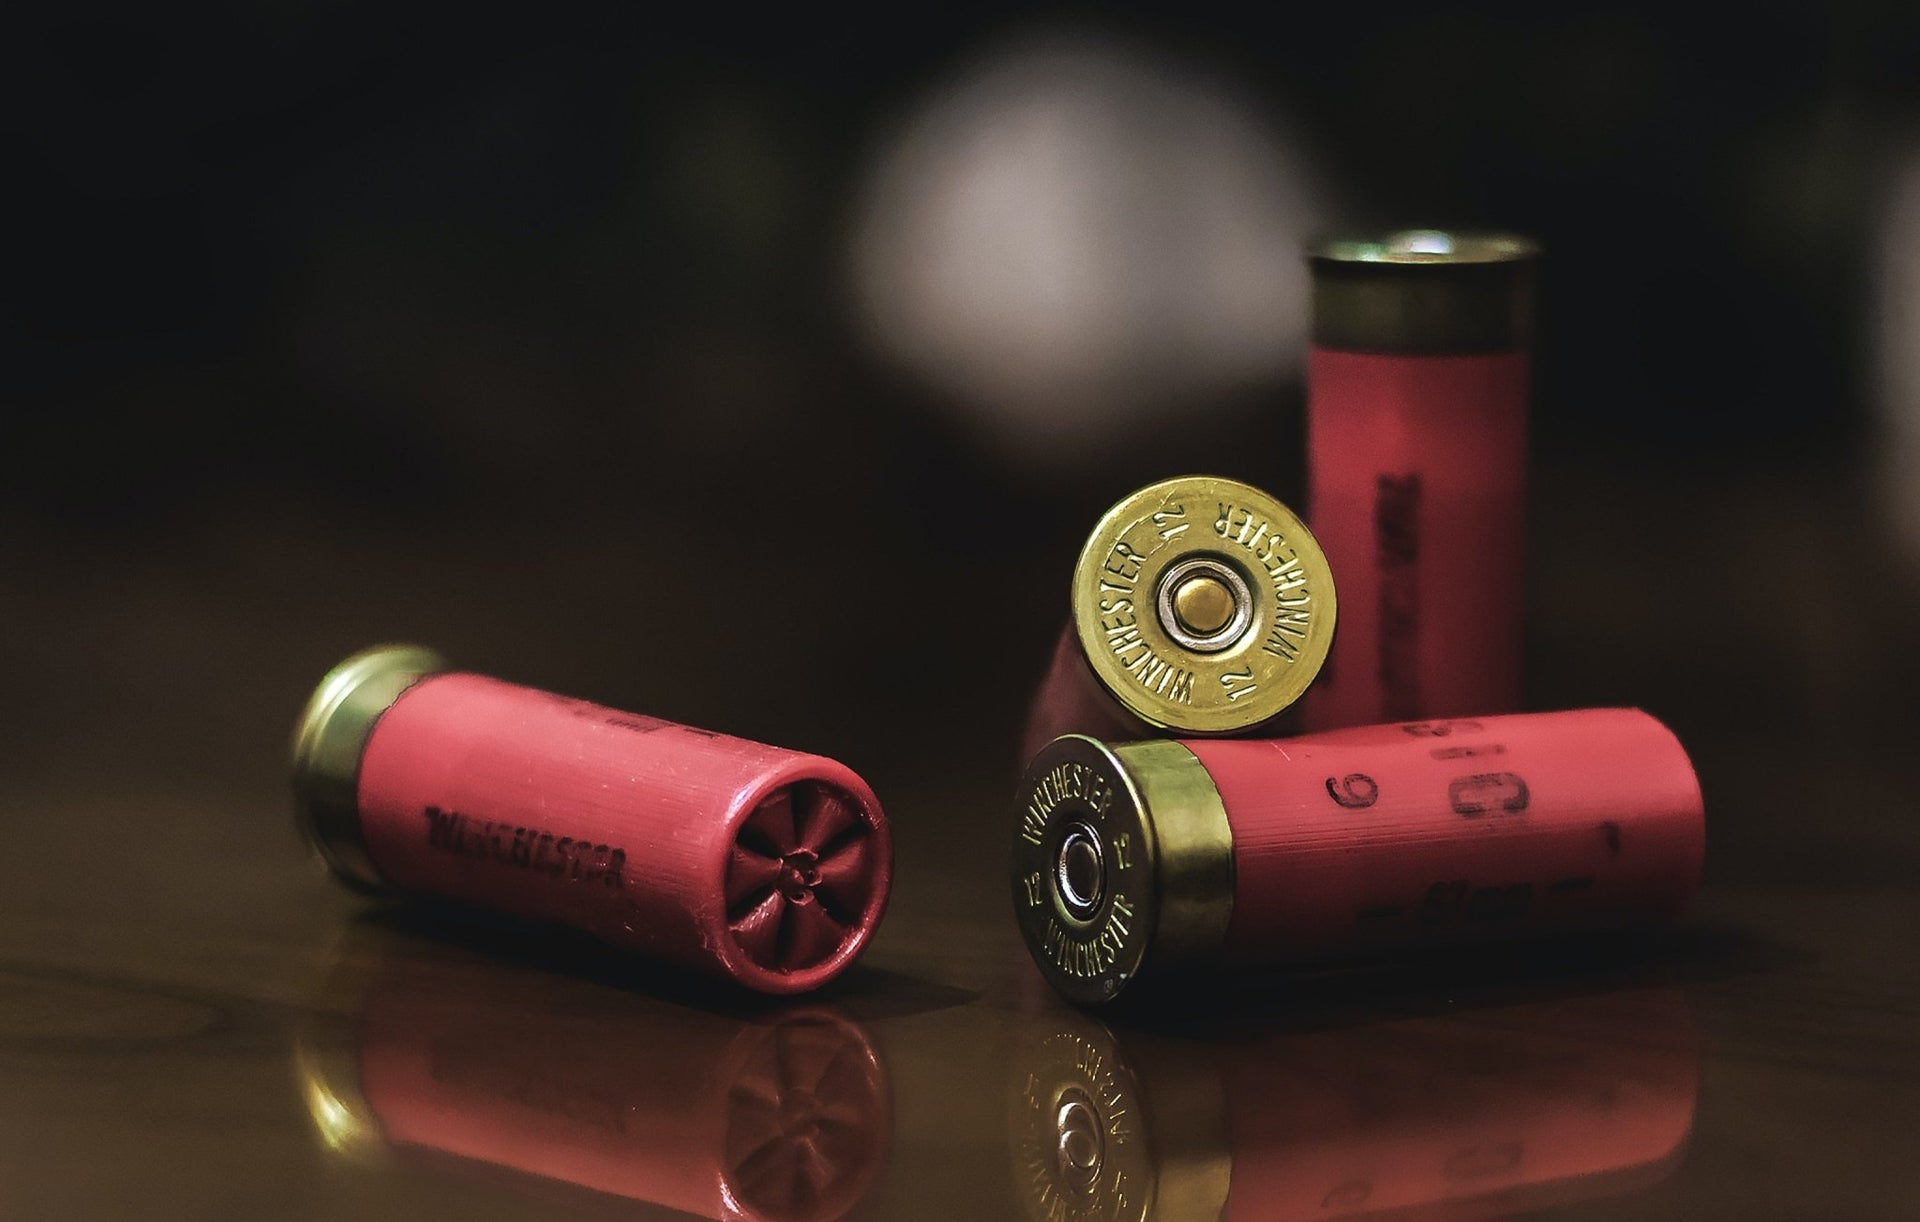 Best Shotgun Shells for Home Defense & Hunting Chosen by